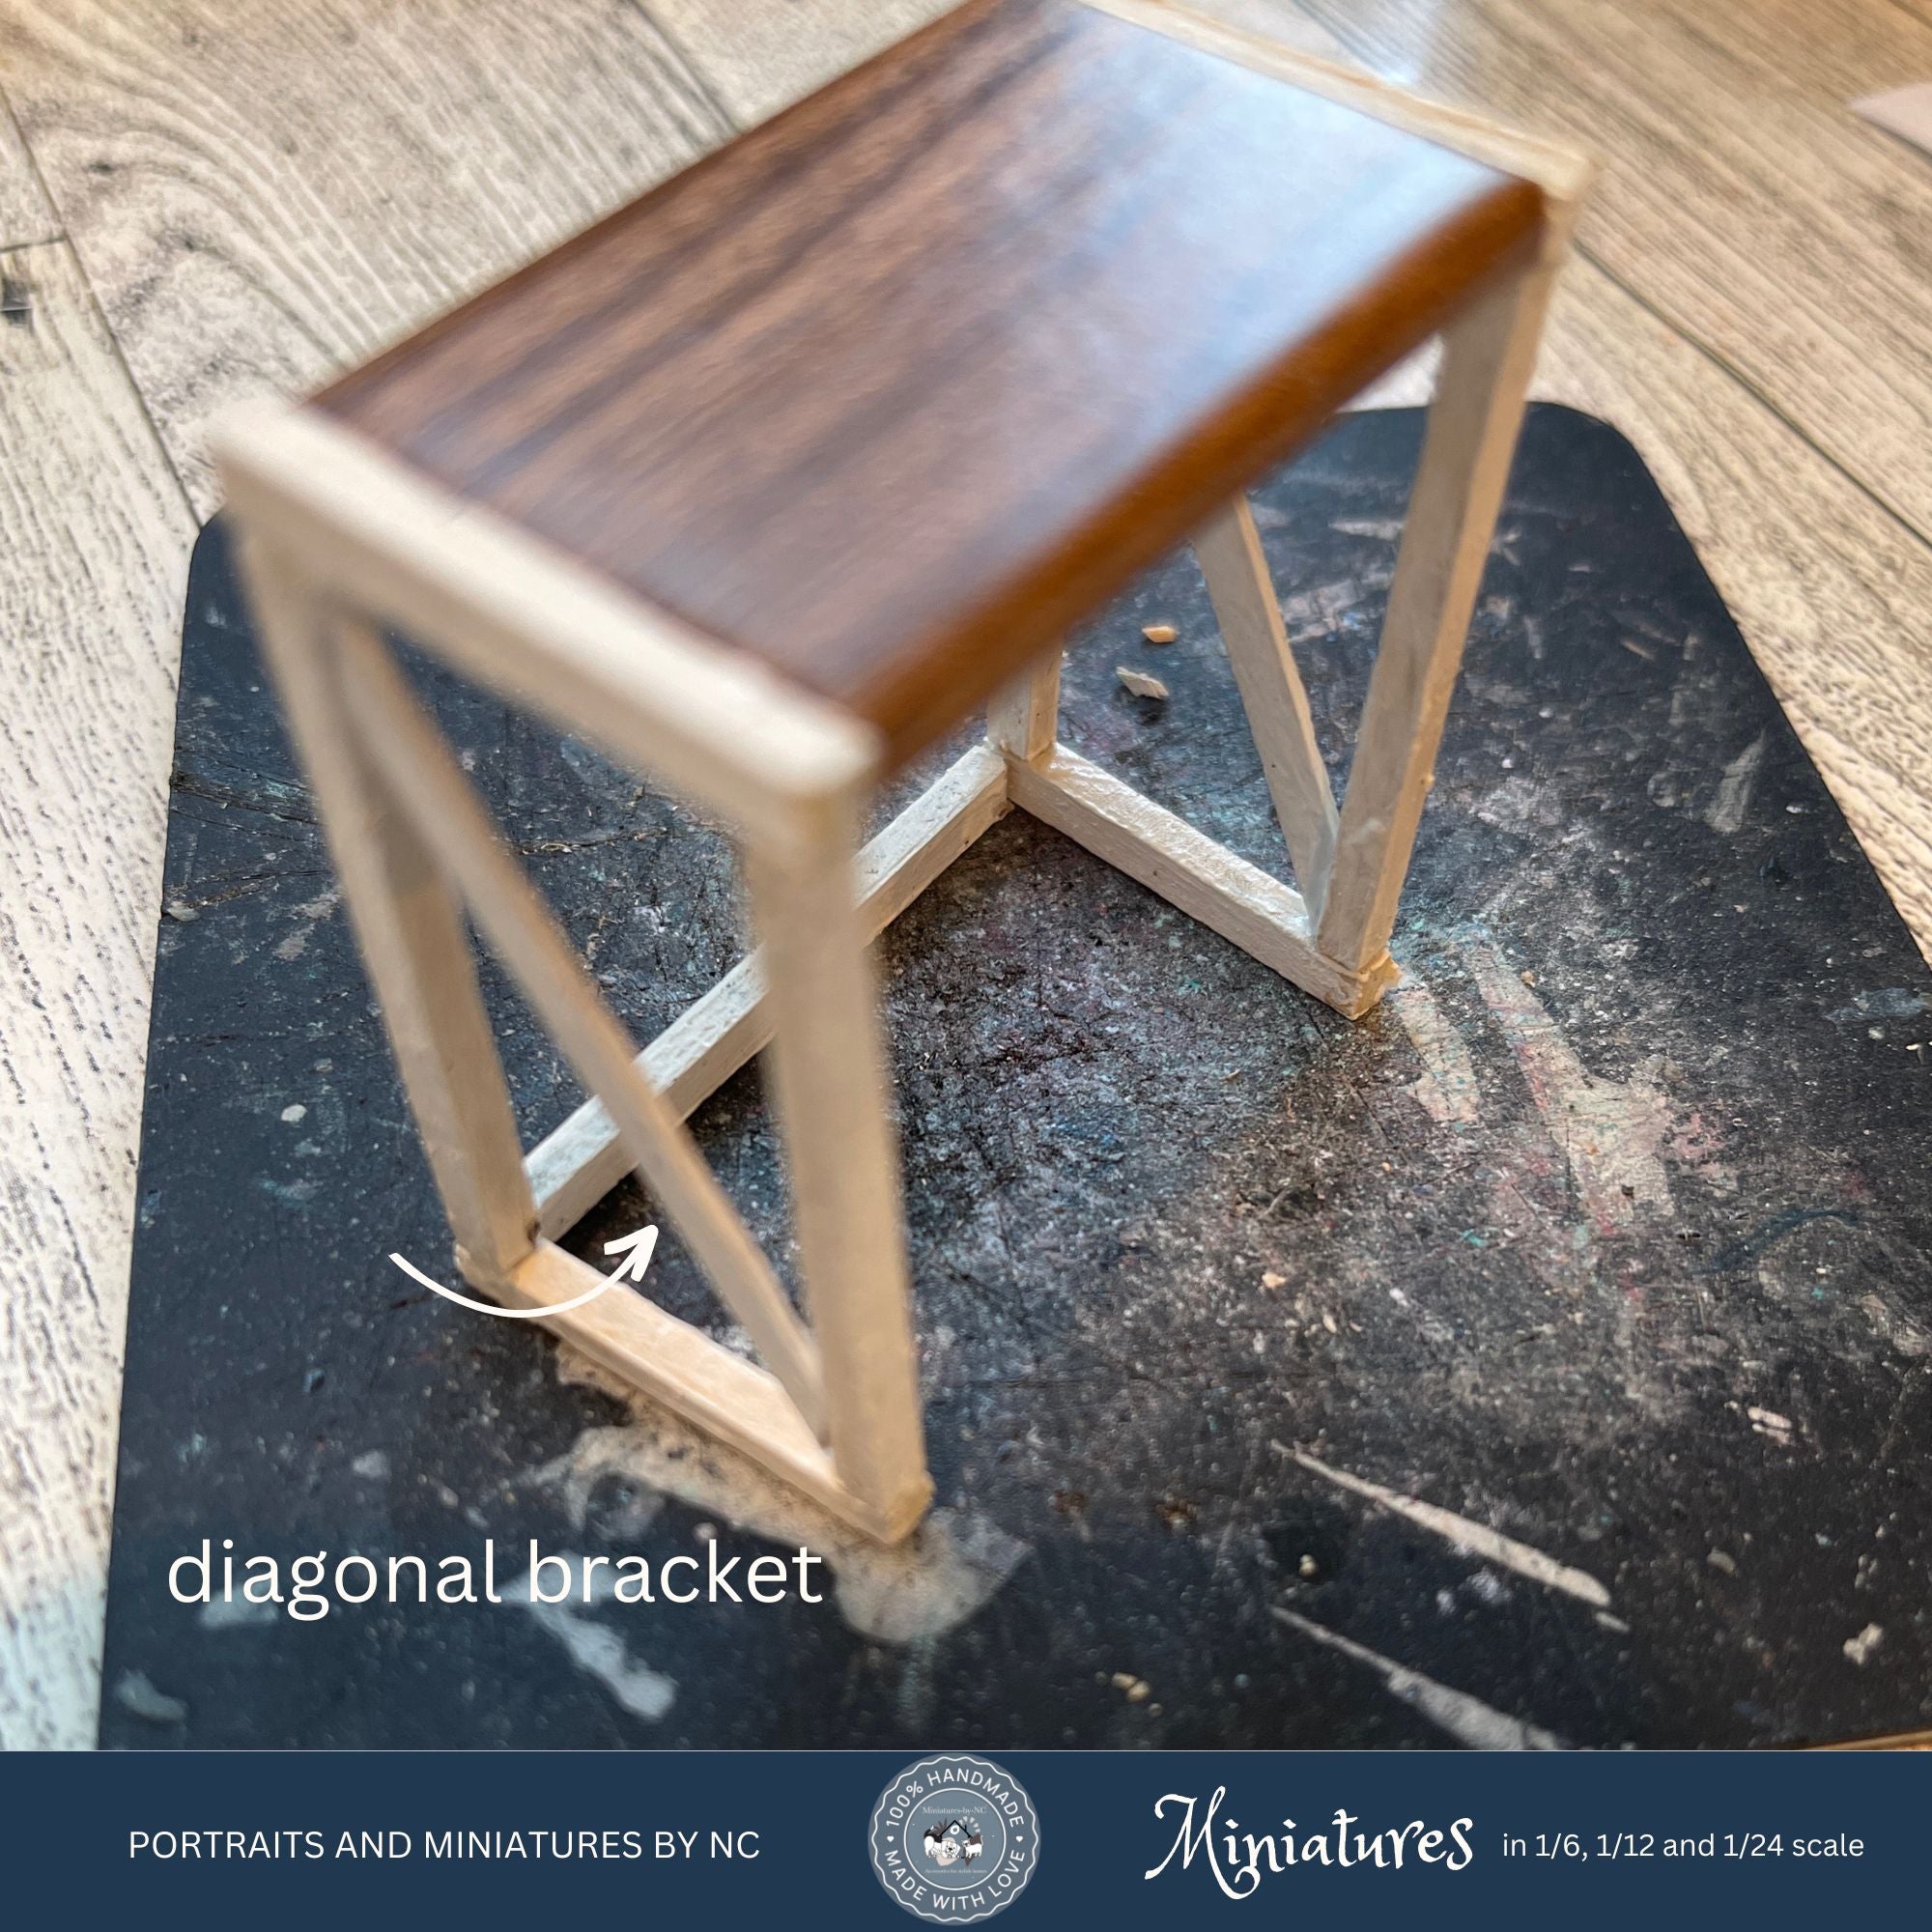 diagonal bracket on table